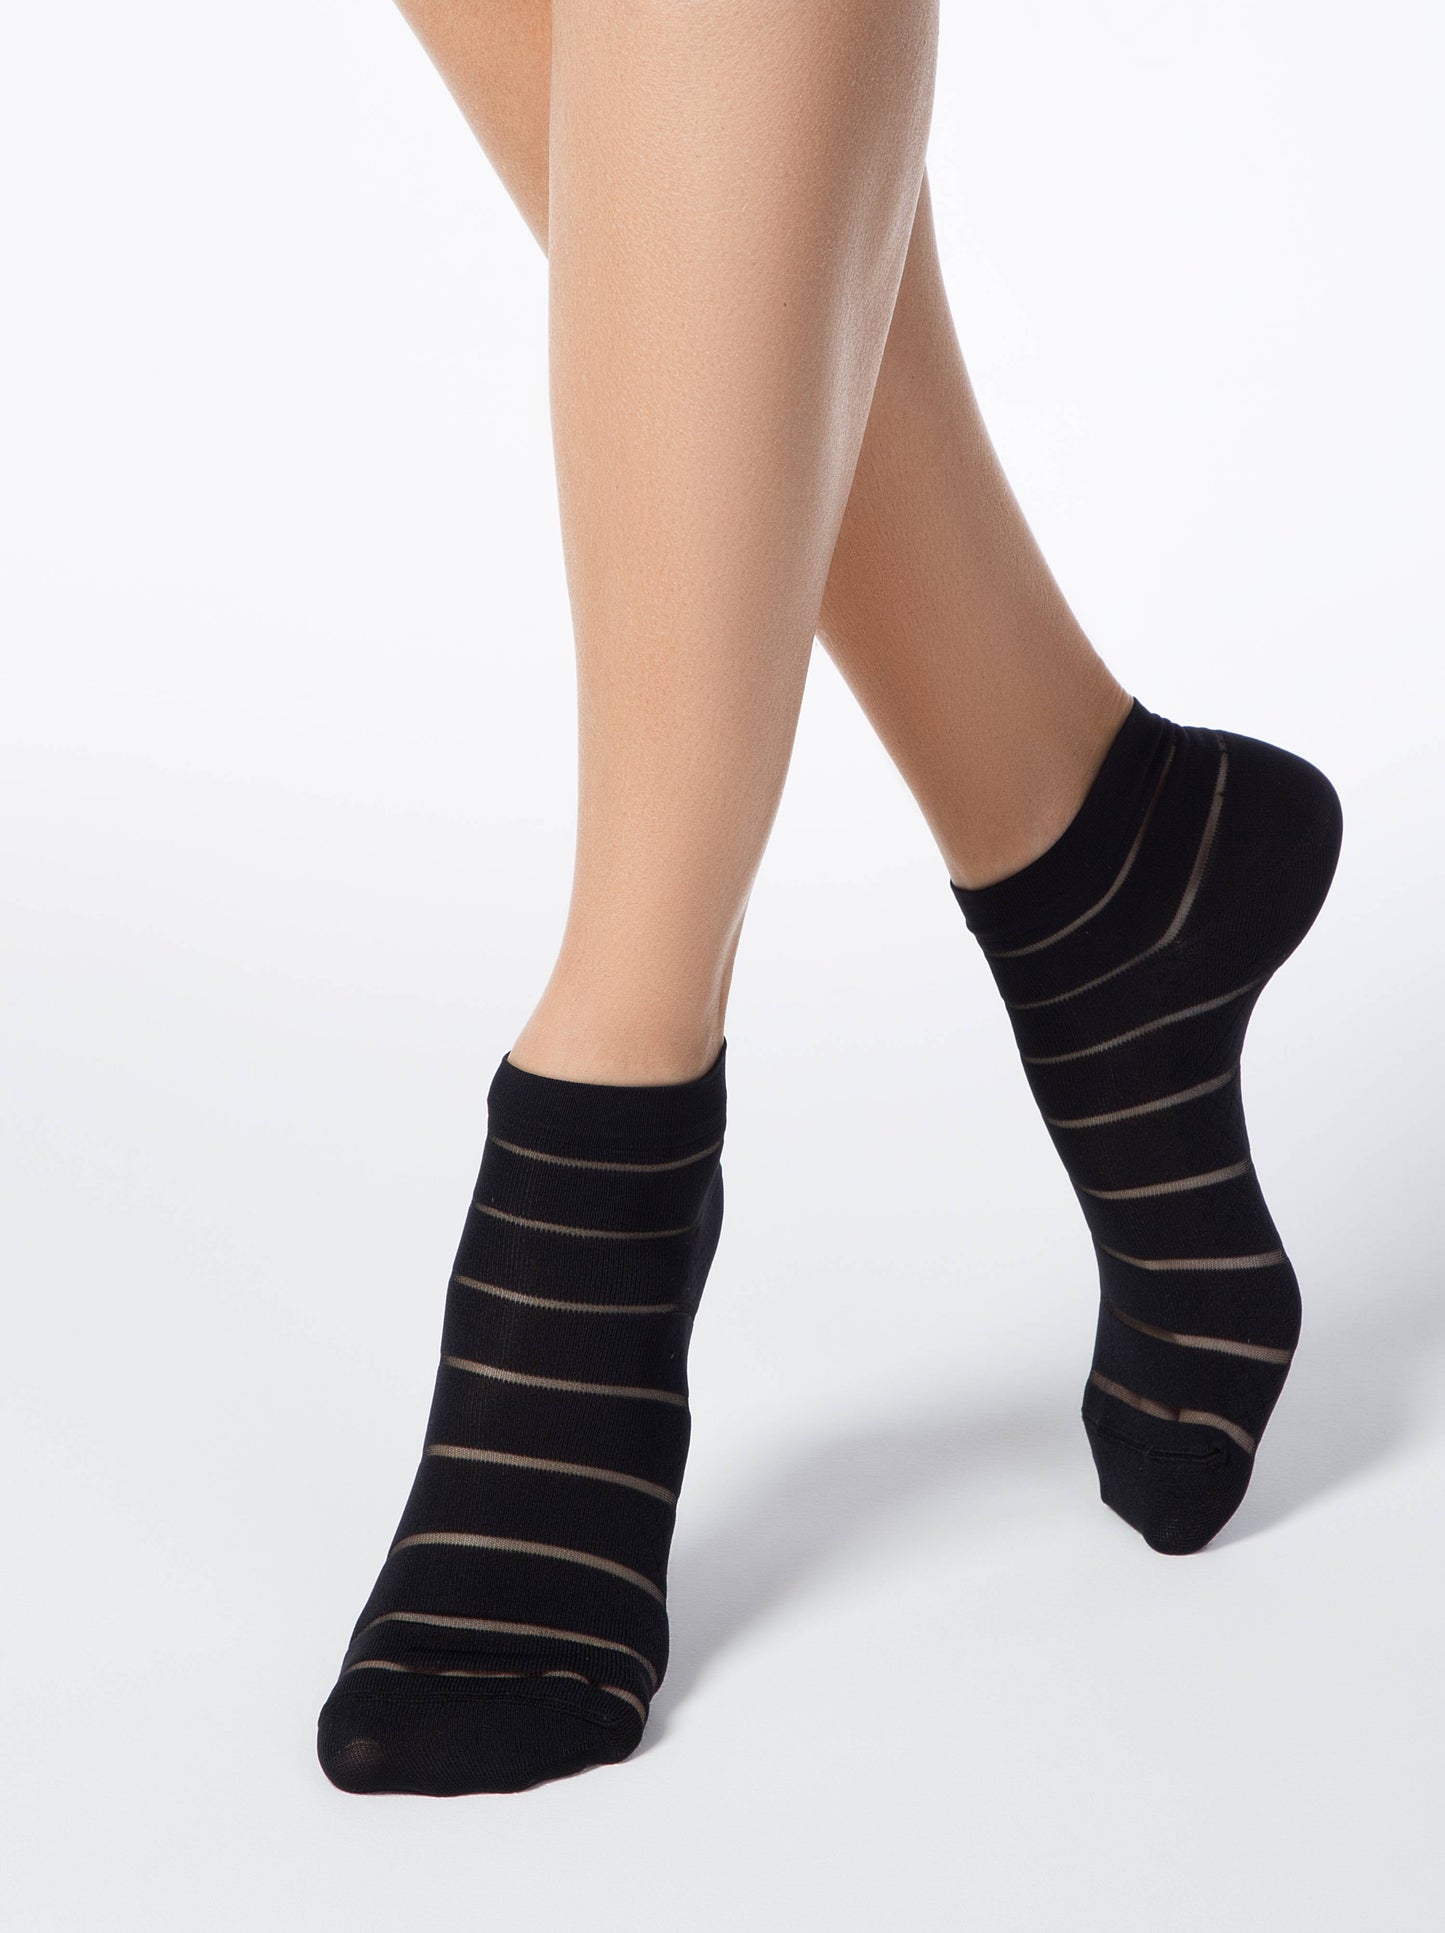 Conte Fantasy #17С-56СП - Lot of 2 pairs Cropped Polyamide Women's Socks